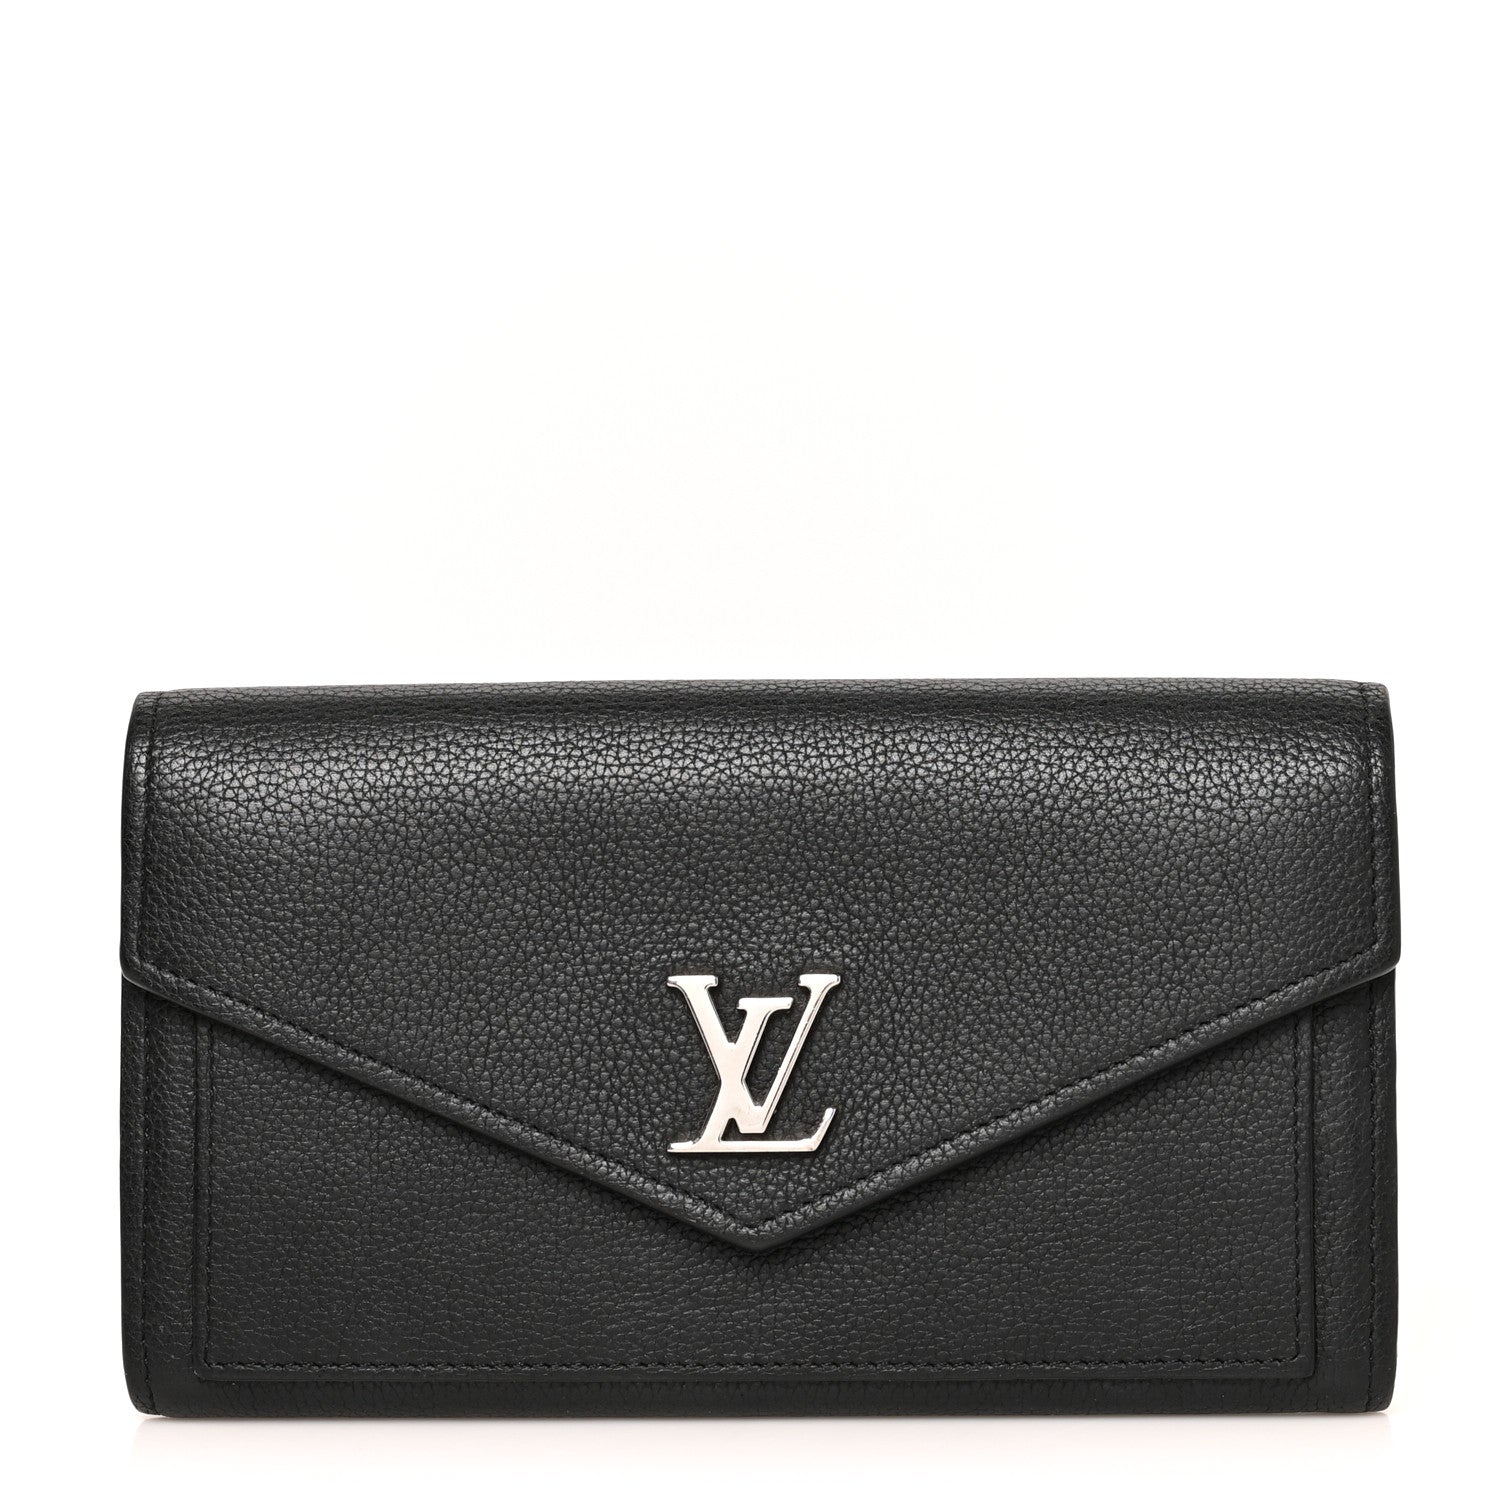 Louis Vuitton My Lockme Mylockme Chain Bag, Grey